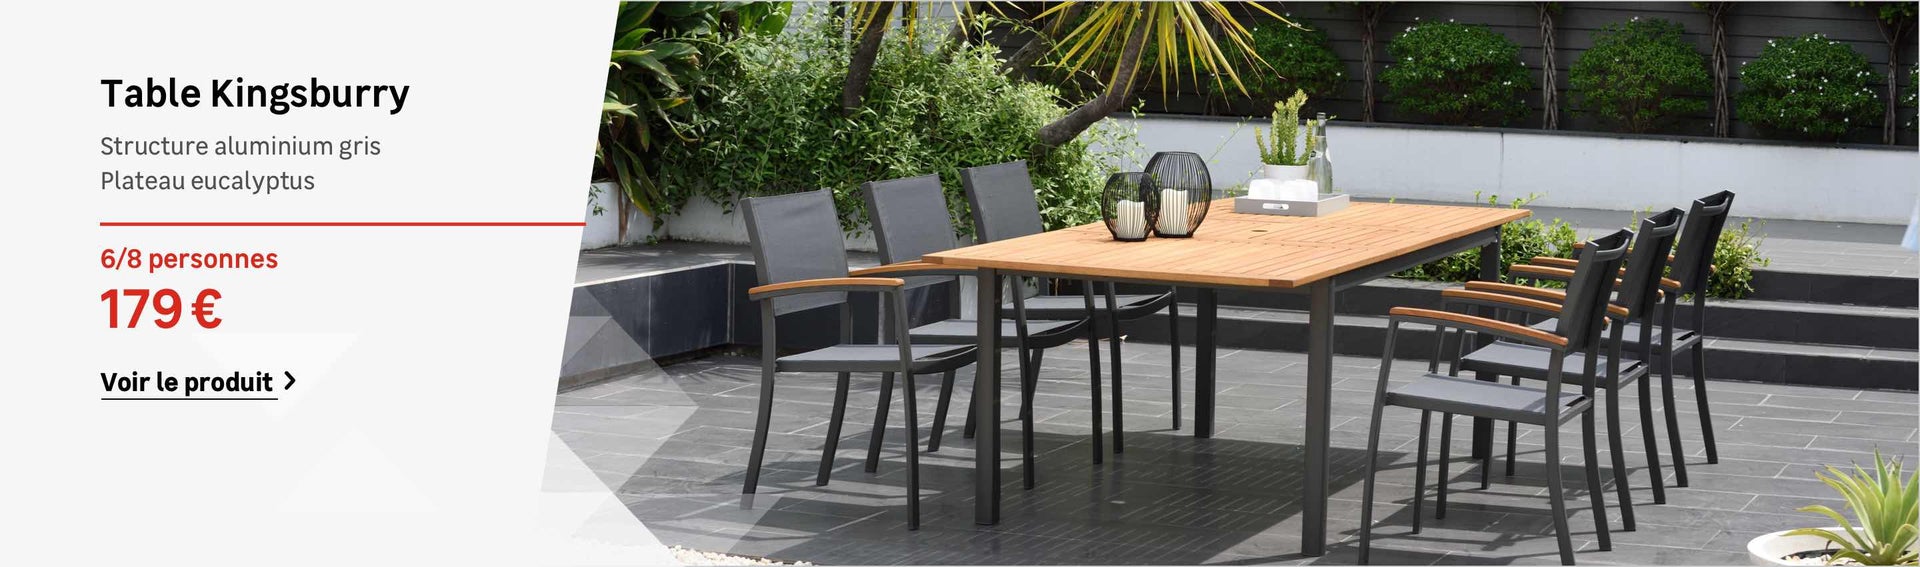 table et chaise de jardin aluminium inspirant table et chaise pour terrasse pas cher de table et chaise de jardin aluminium